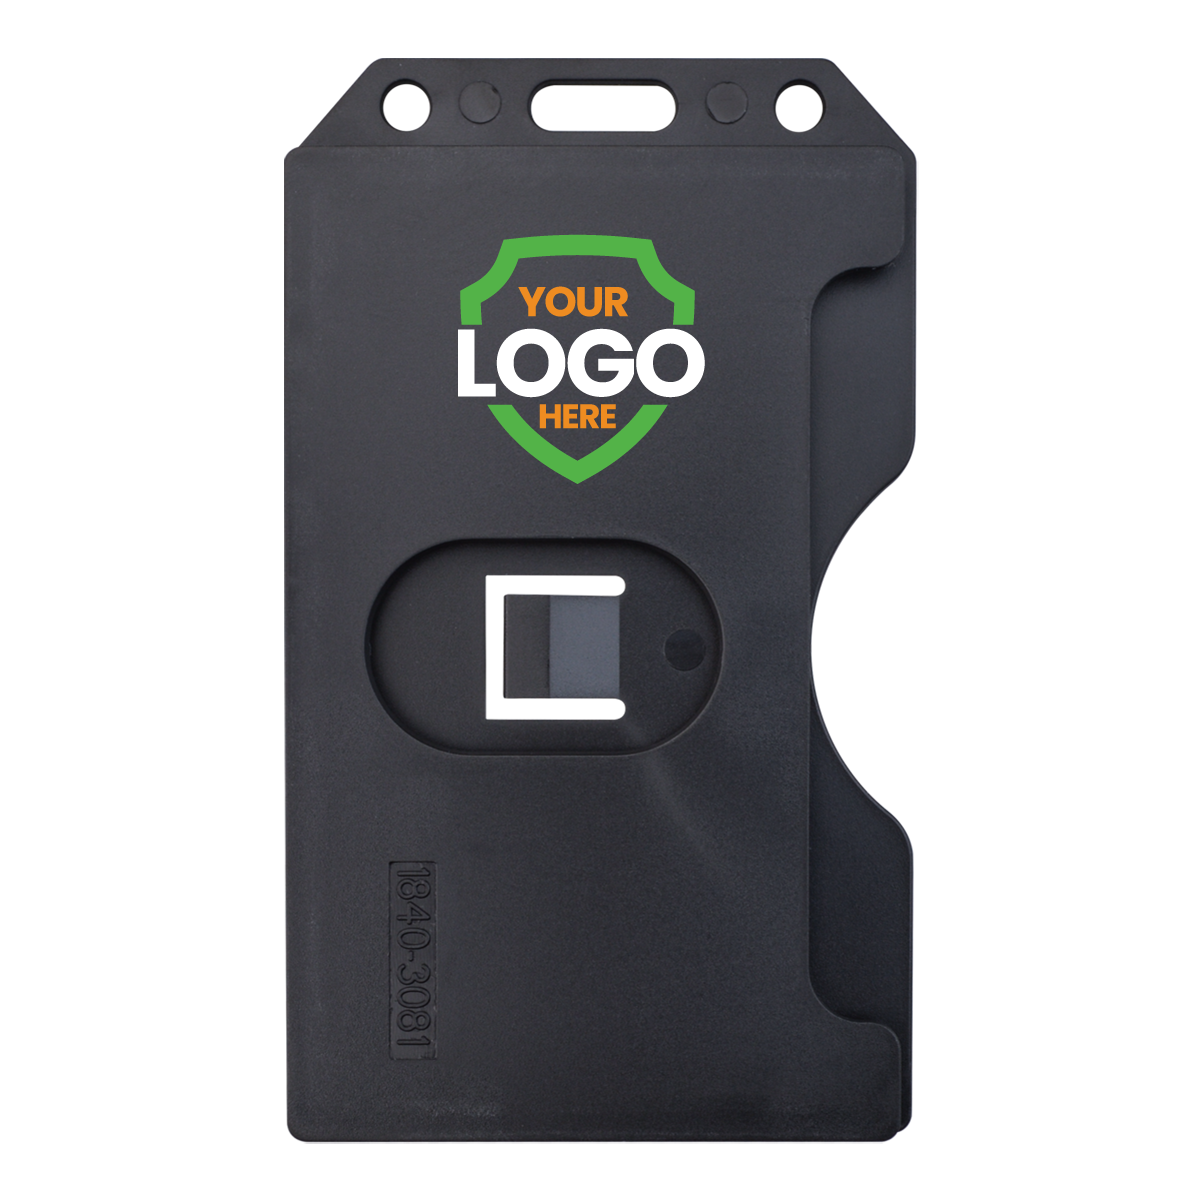 Vertical hard plastic black multi card badge holder with example logo showing customization option